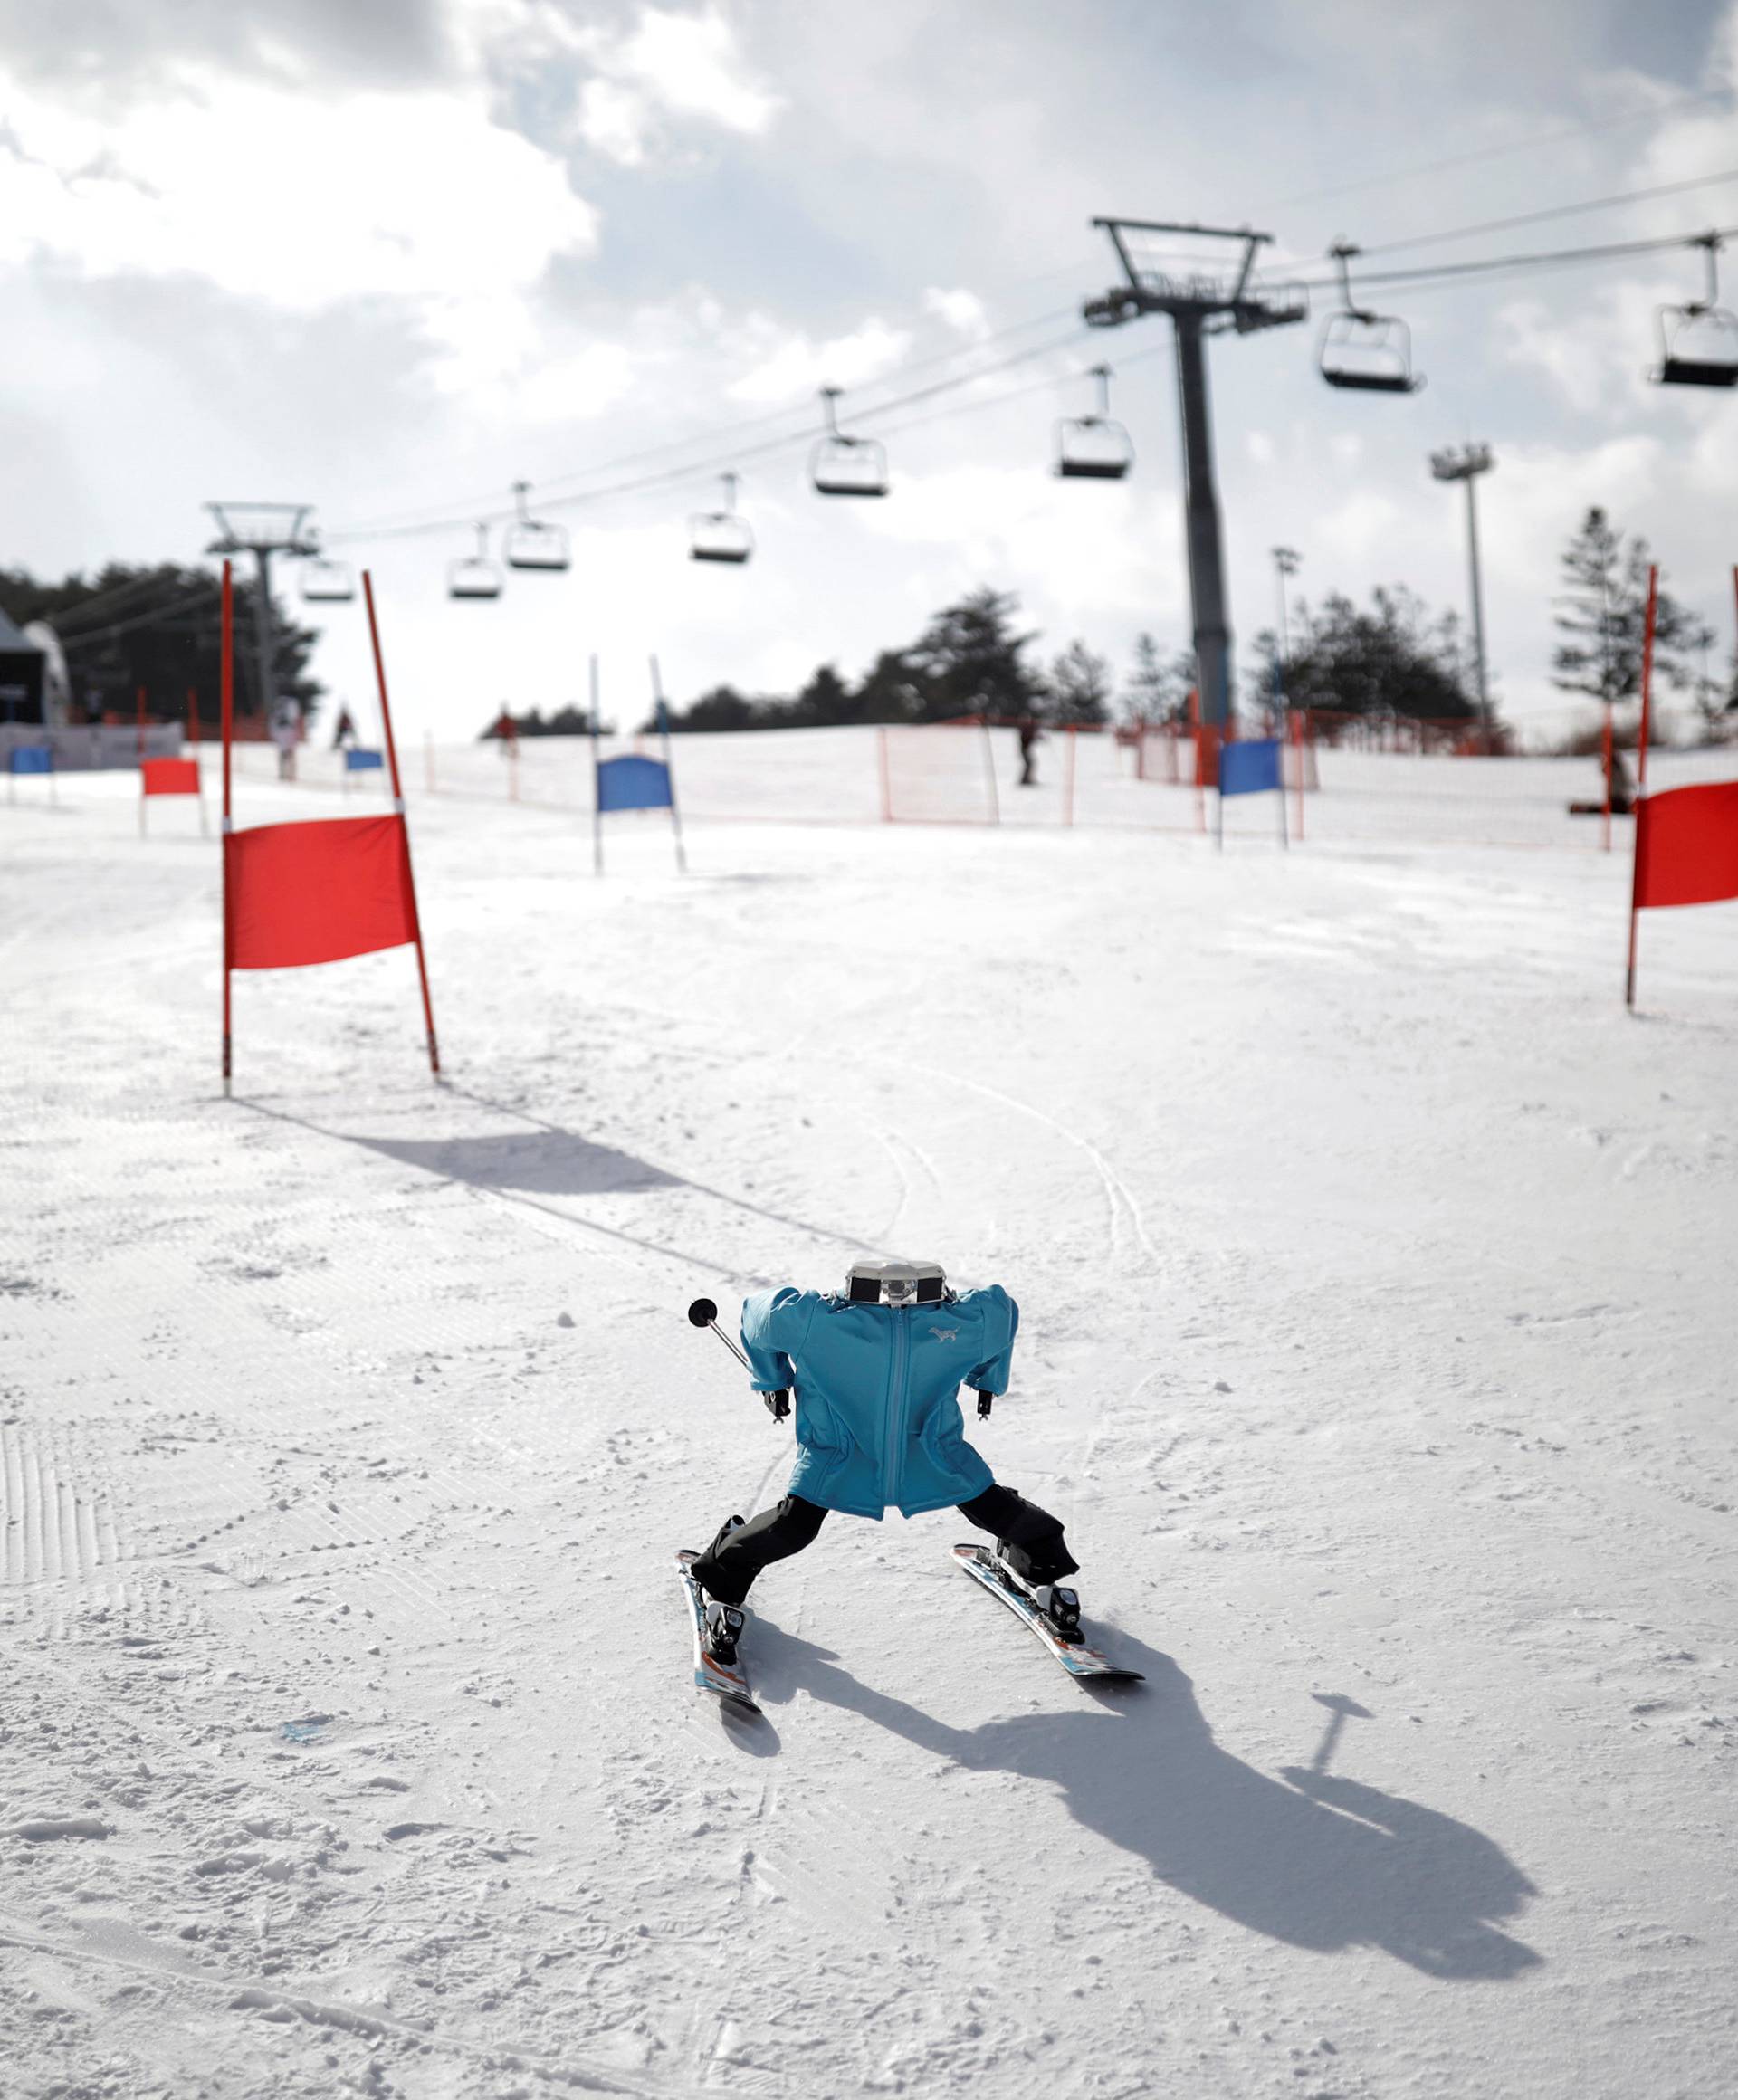 Robot Tae Kwon V skies during the Ski Robot Challenge at a ski resort in Hoenseong